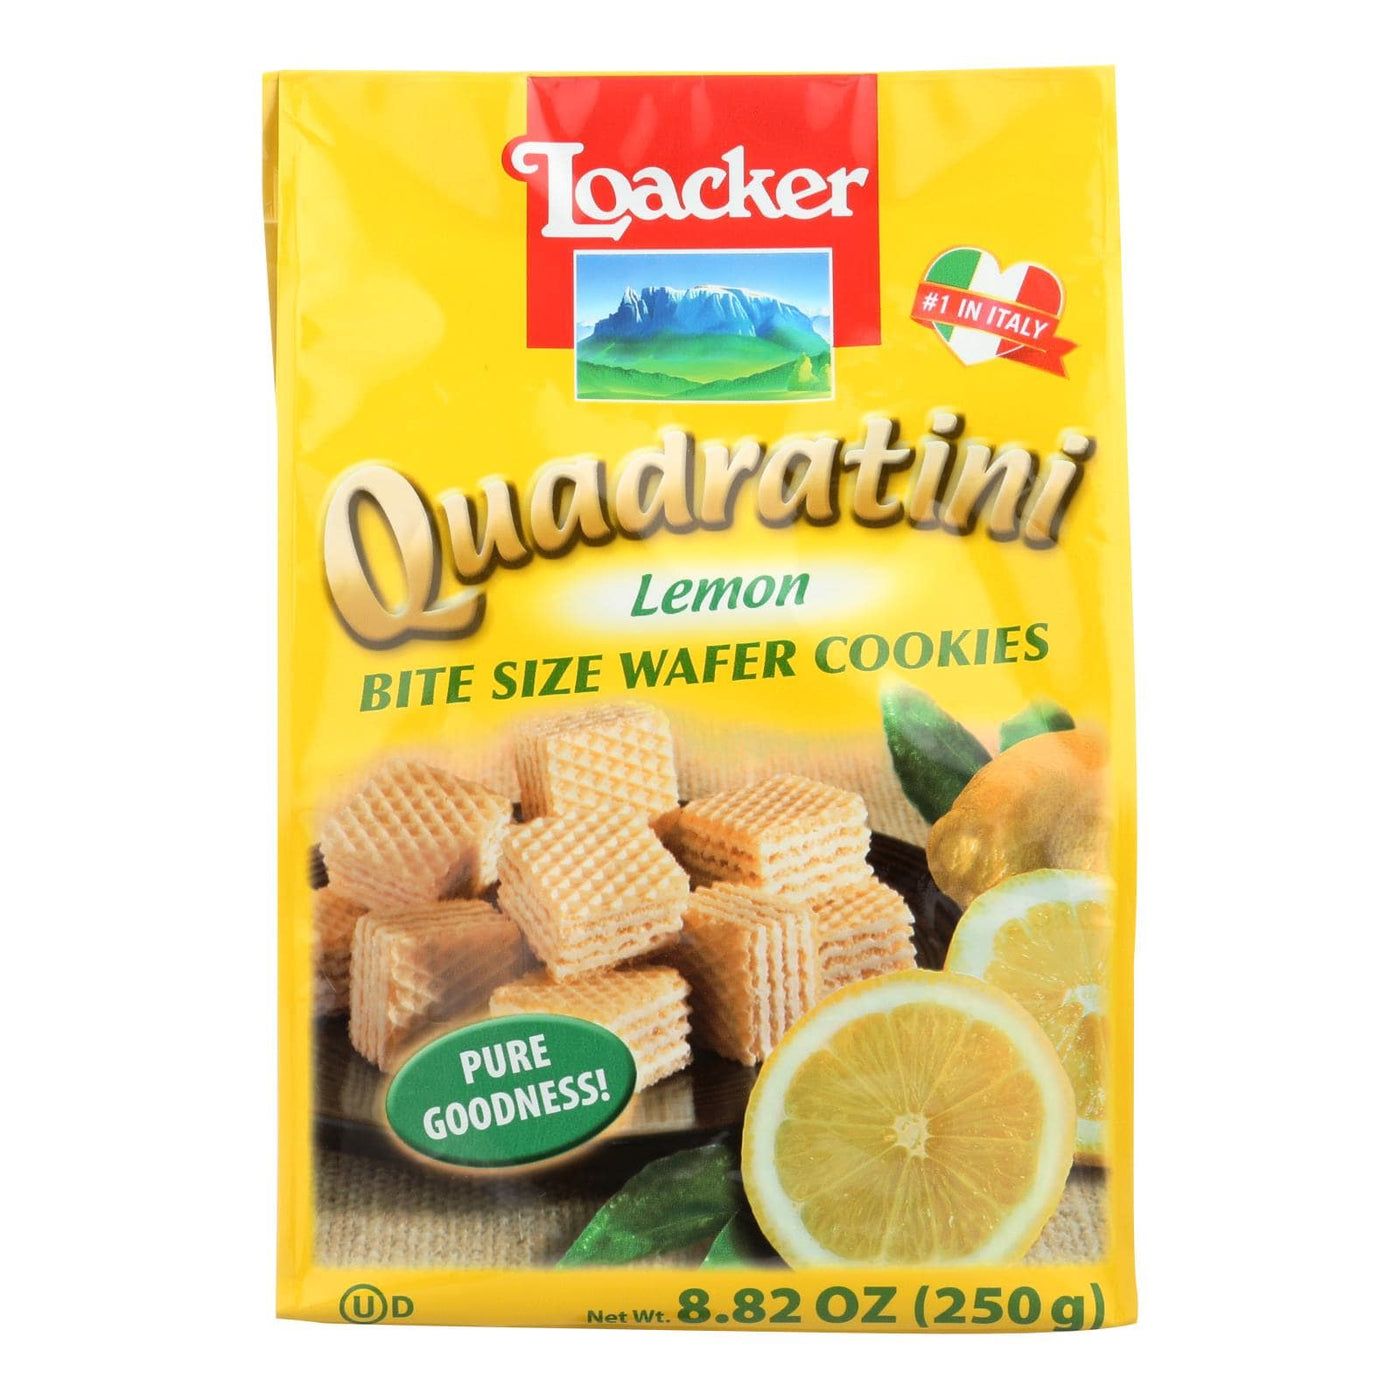 Loacker, Quadratini Lemon Bite Size Wafer Cookies - Case Of 6 - 8.82 Oz | OnlyNaturals.us